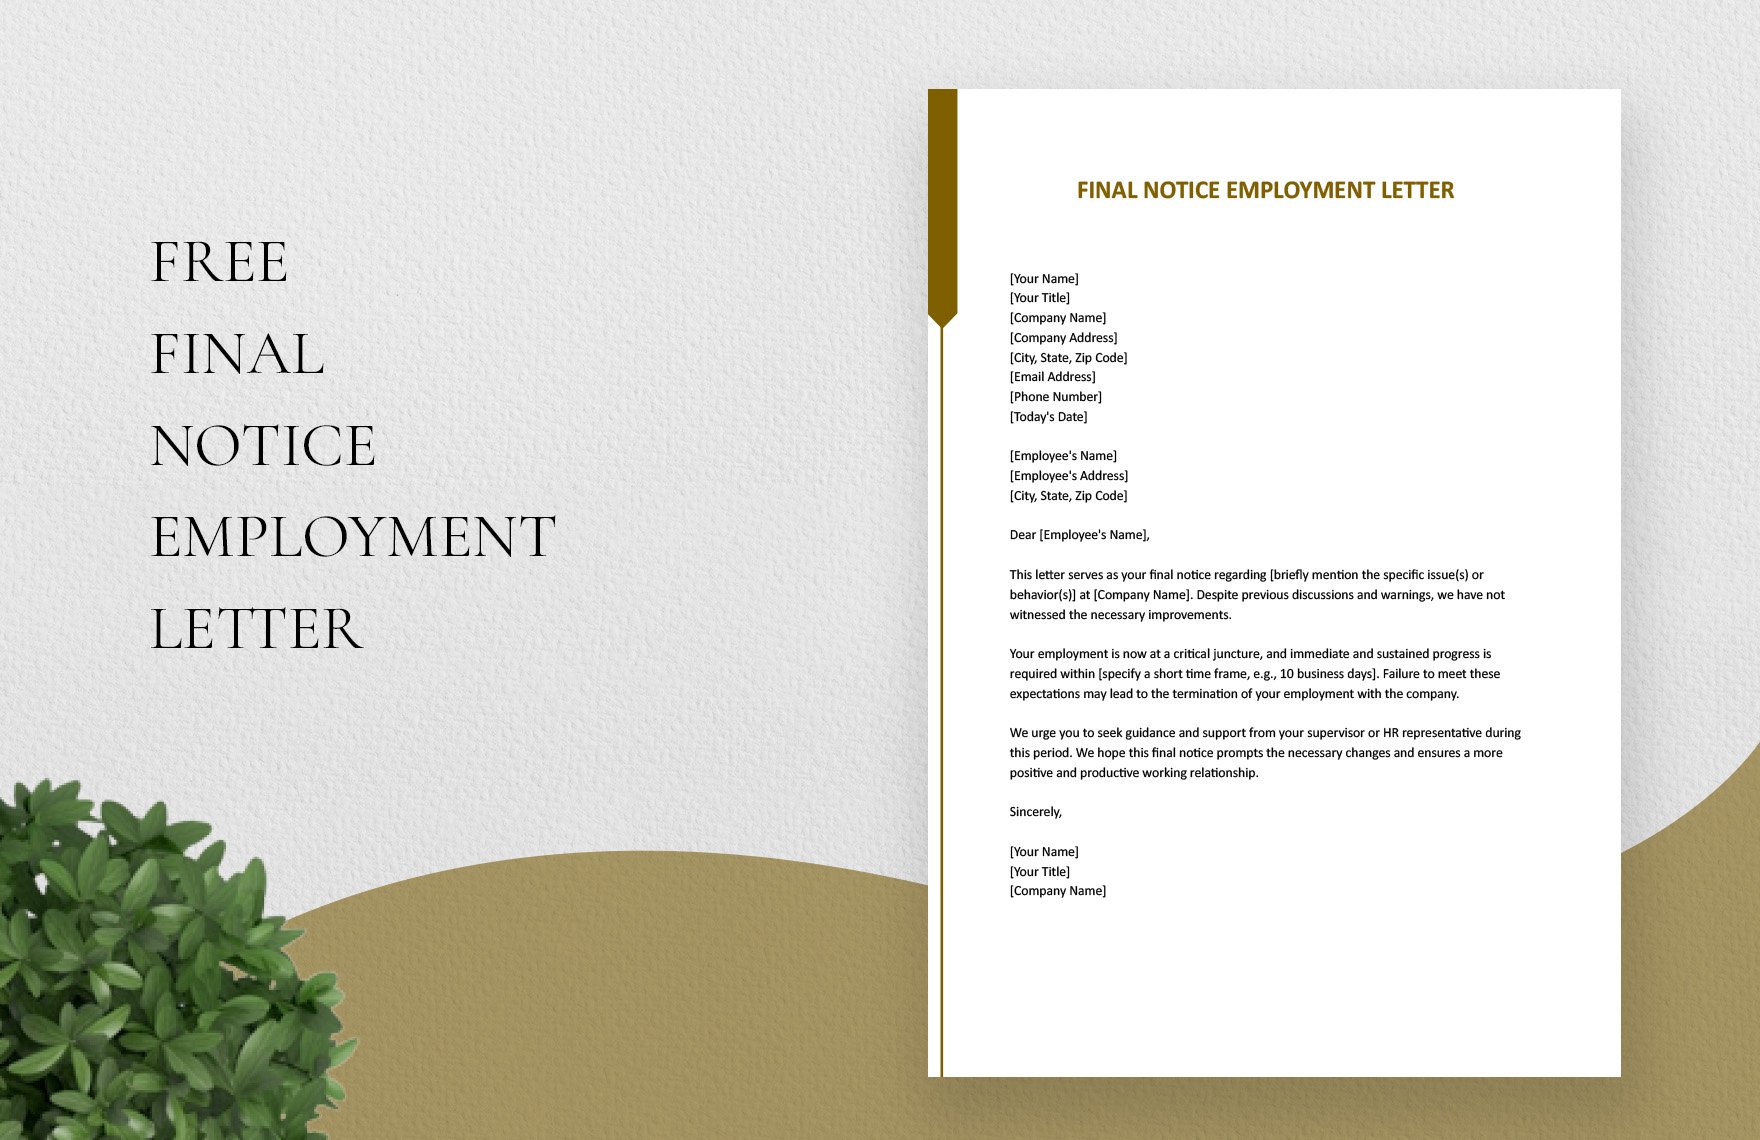 Final Notice Employment Letter